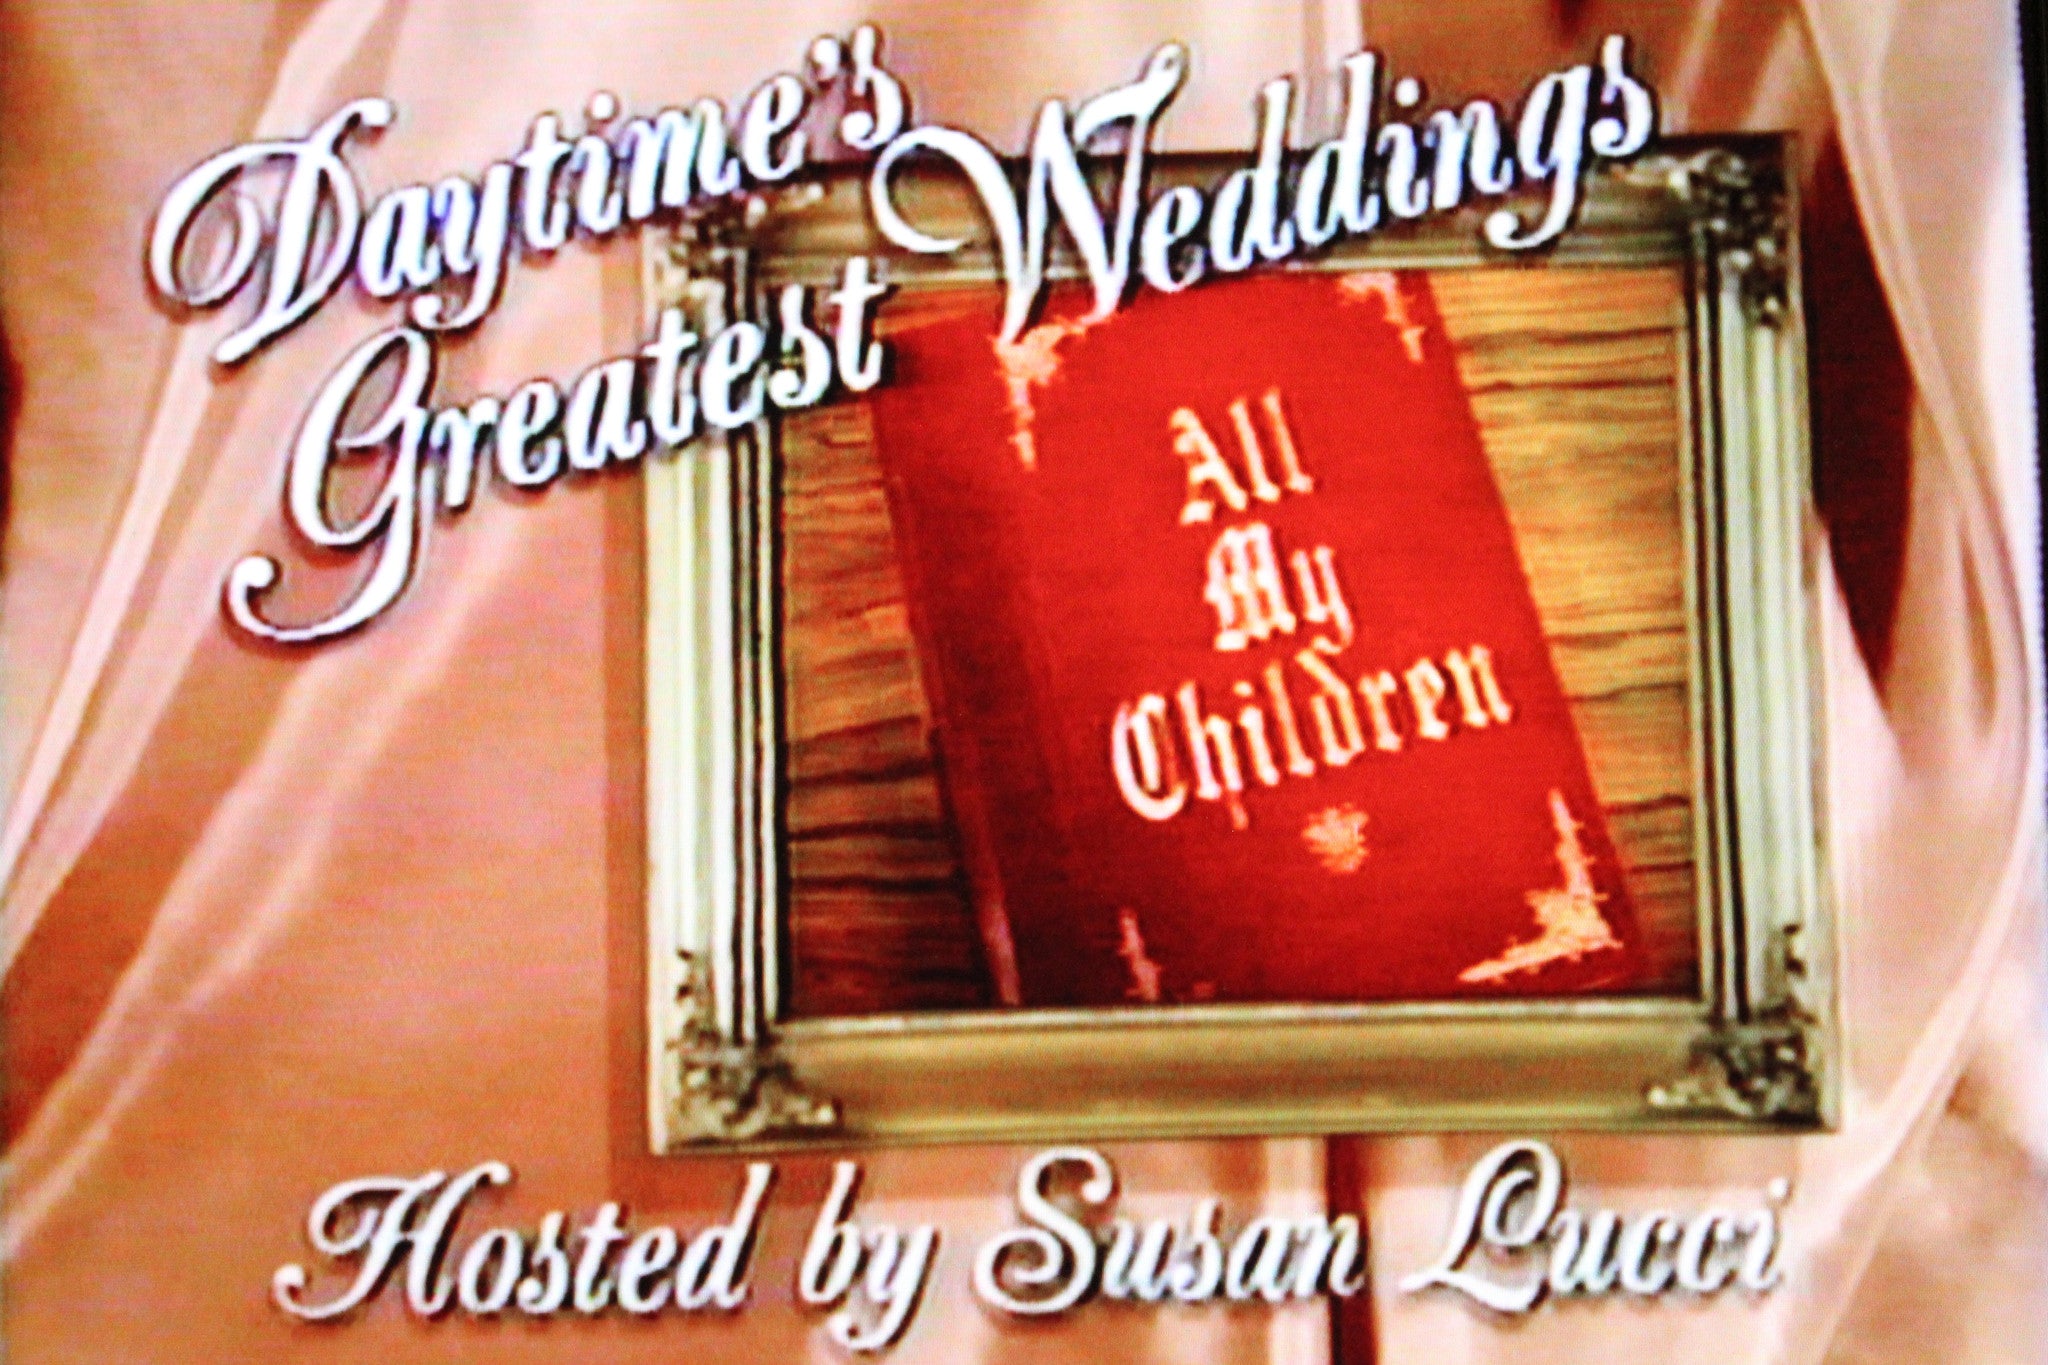 DAYTIME'S GREATEST WEDDINGS: ALL MY CHILDREN (ABC) - Rewatch Classic TV - 1